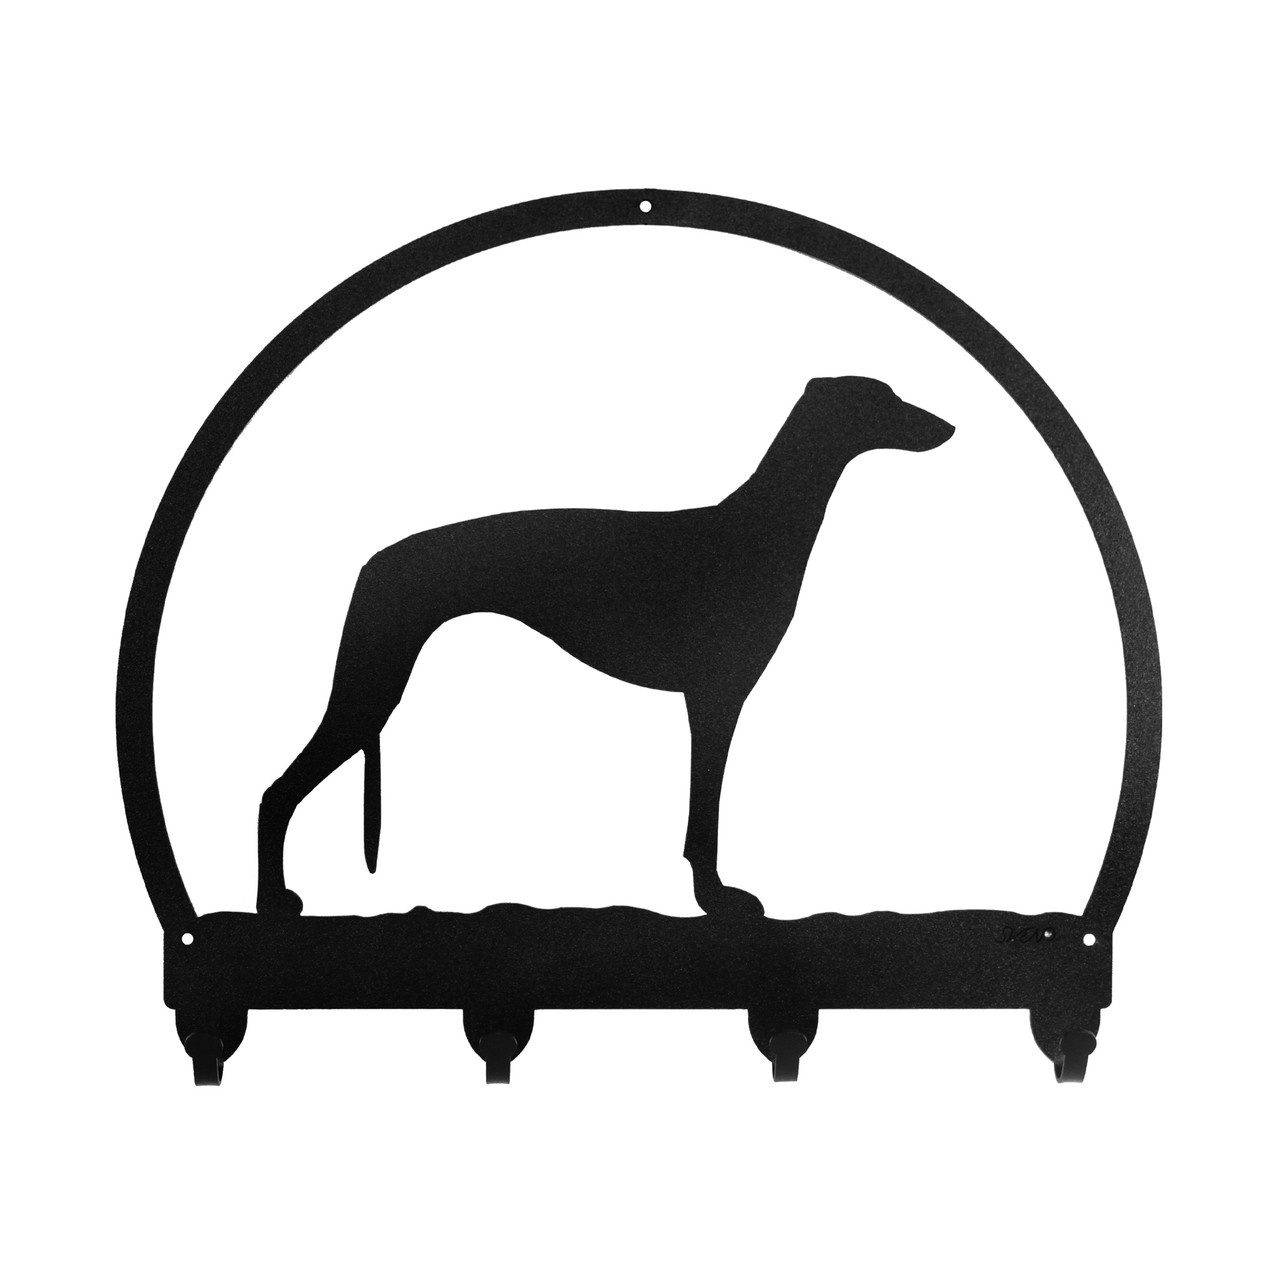 SWEN Products WIREHAIRED DACHSHUND Dog Black Metal Key Chain Holder Hanger 